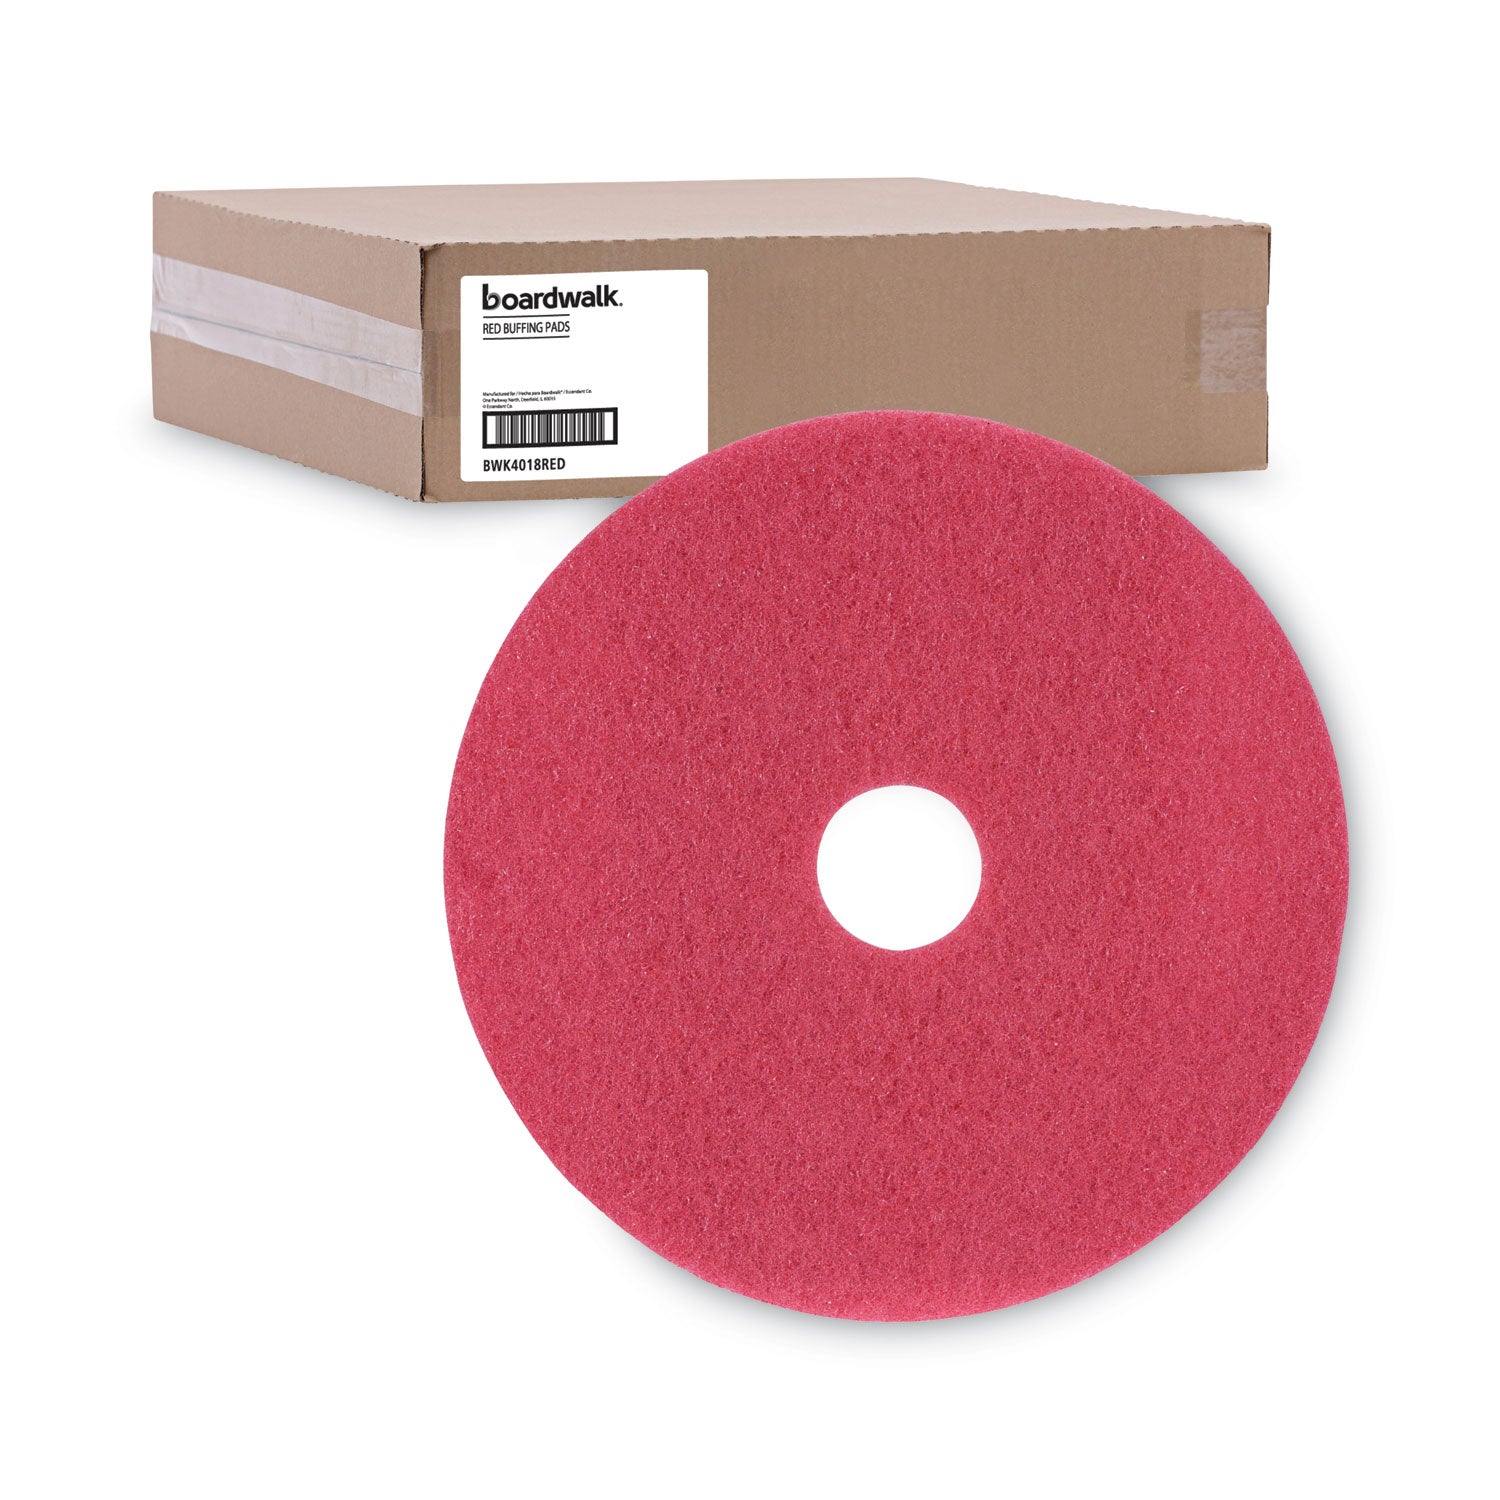 buffing-floor-pads-18-diameter-red-5-carton_bwk4018red - 5